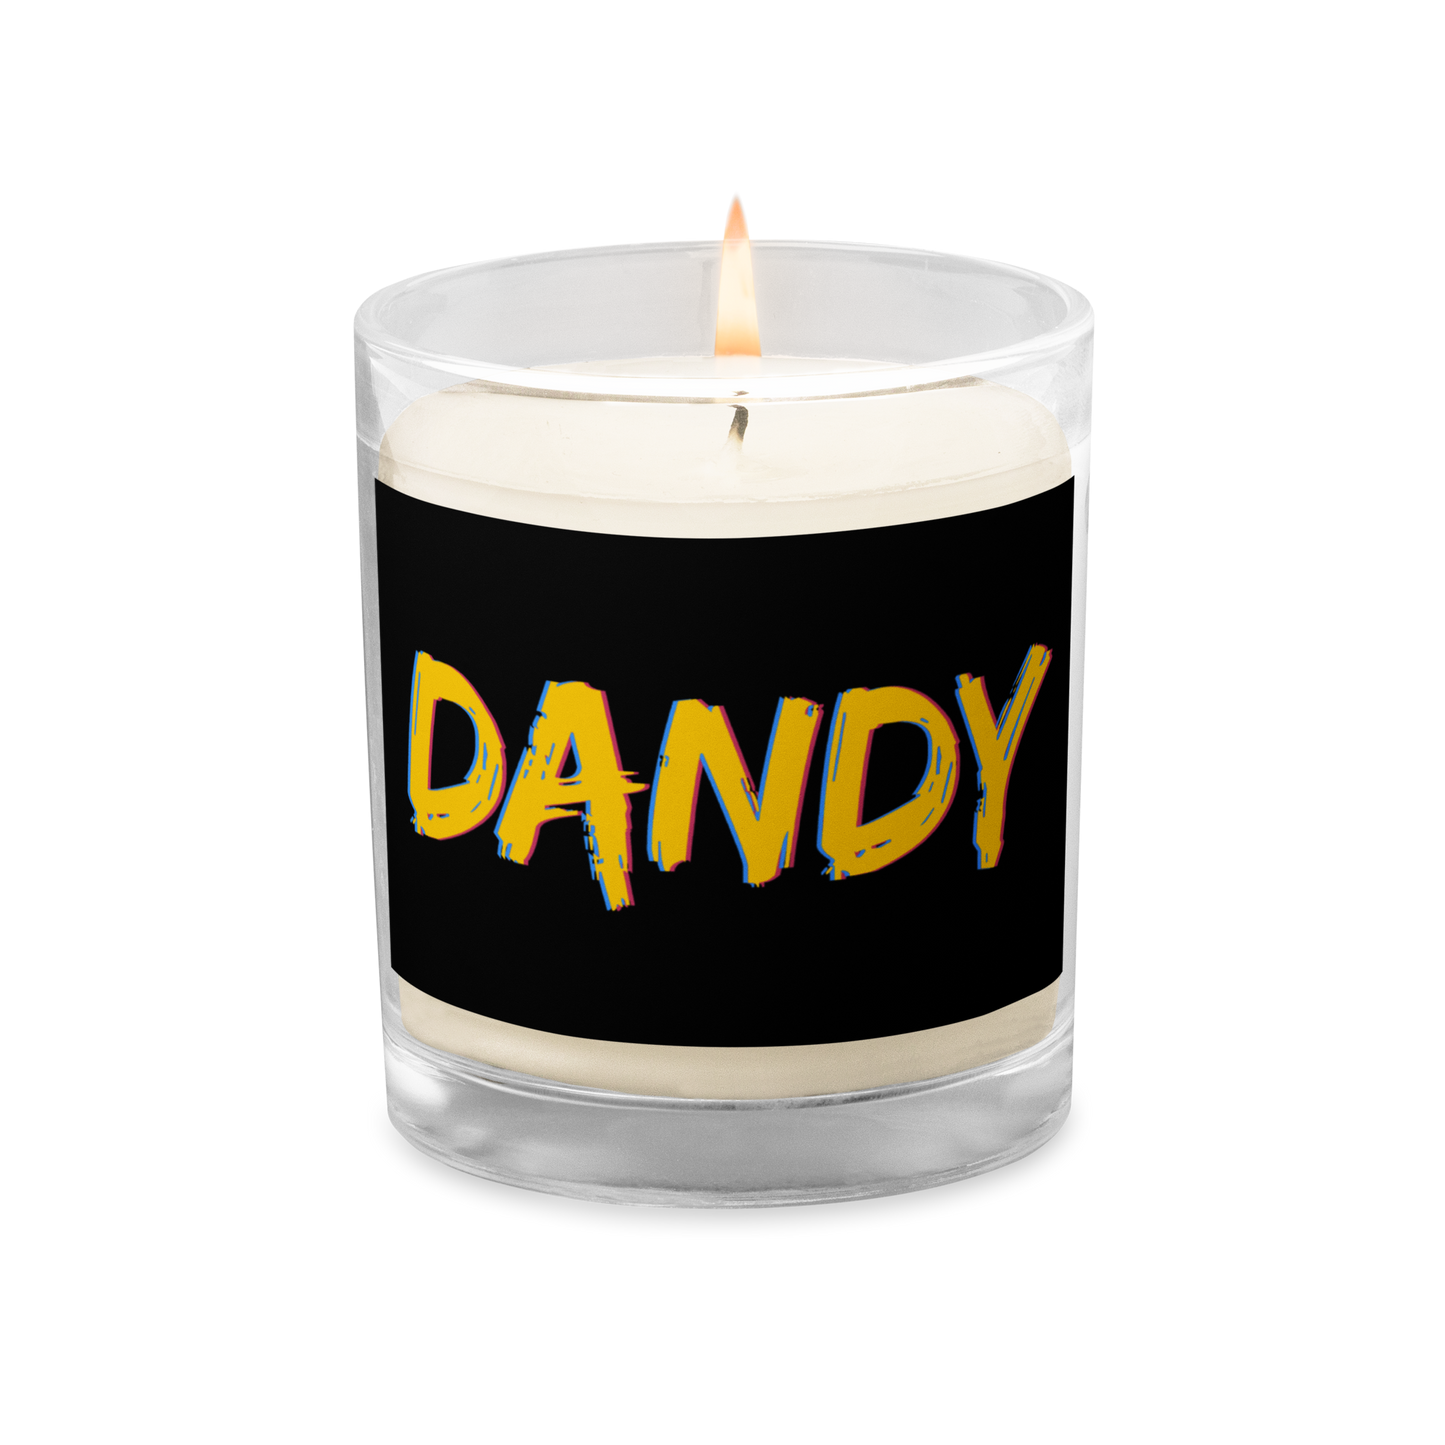 Dandy Glass jar soy wax candle